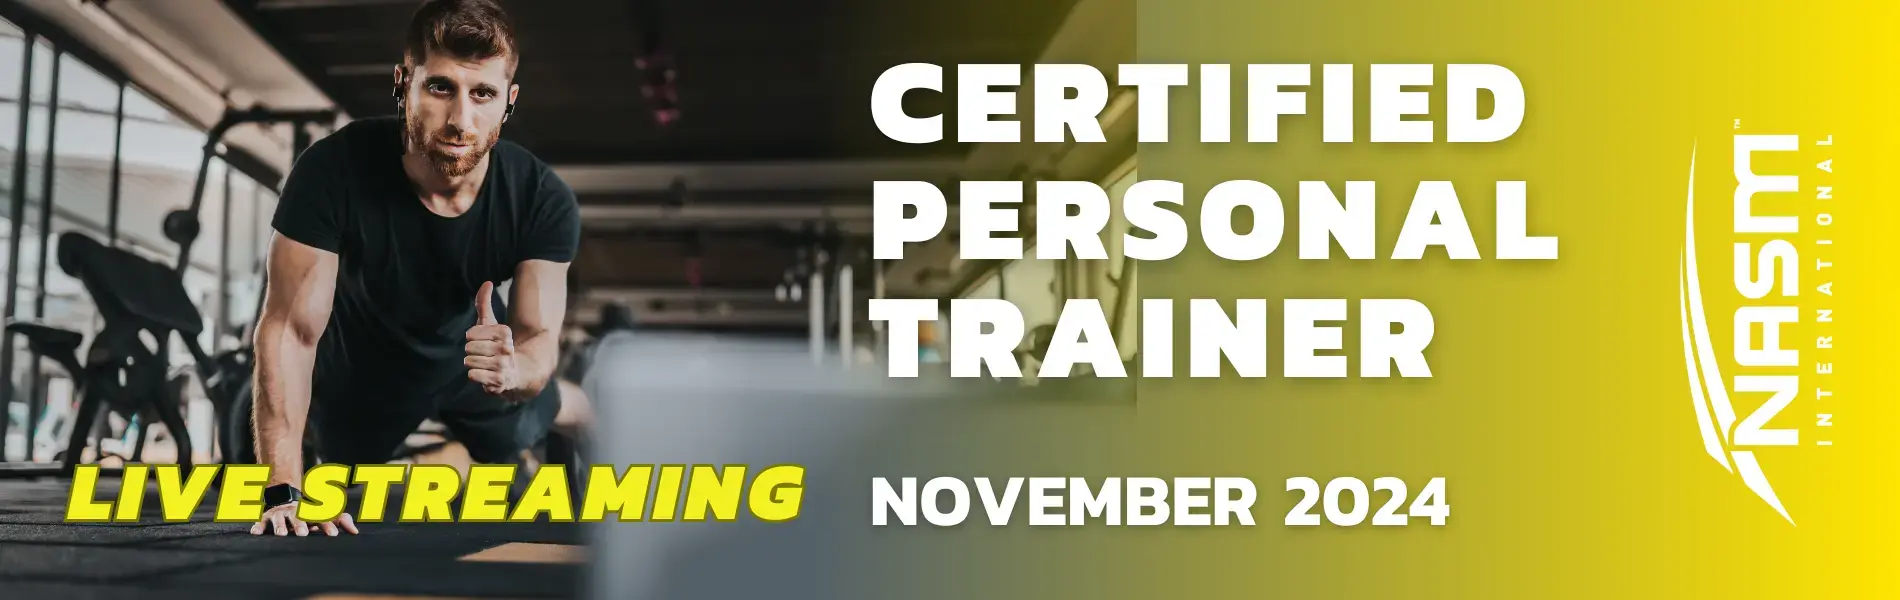 Certified personal trainer workshop